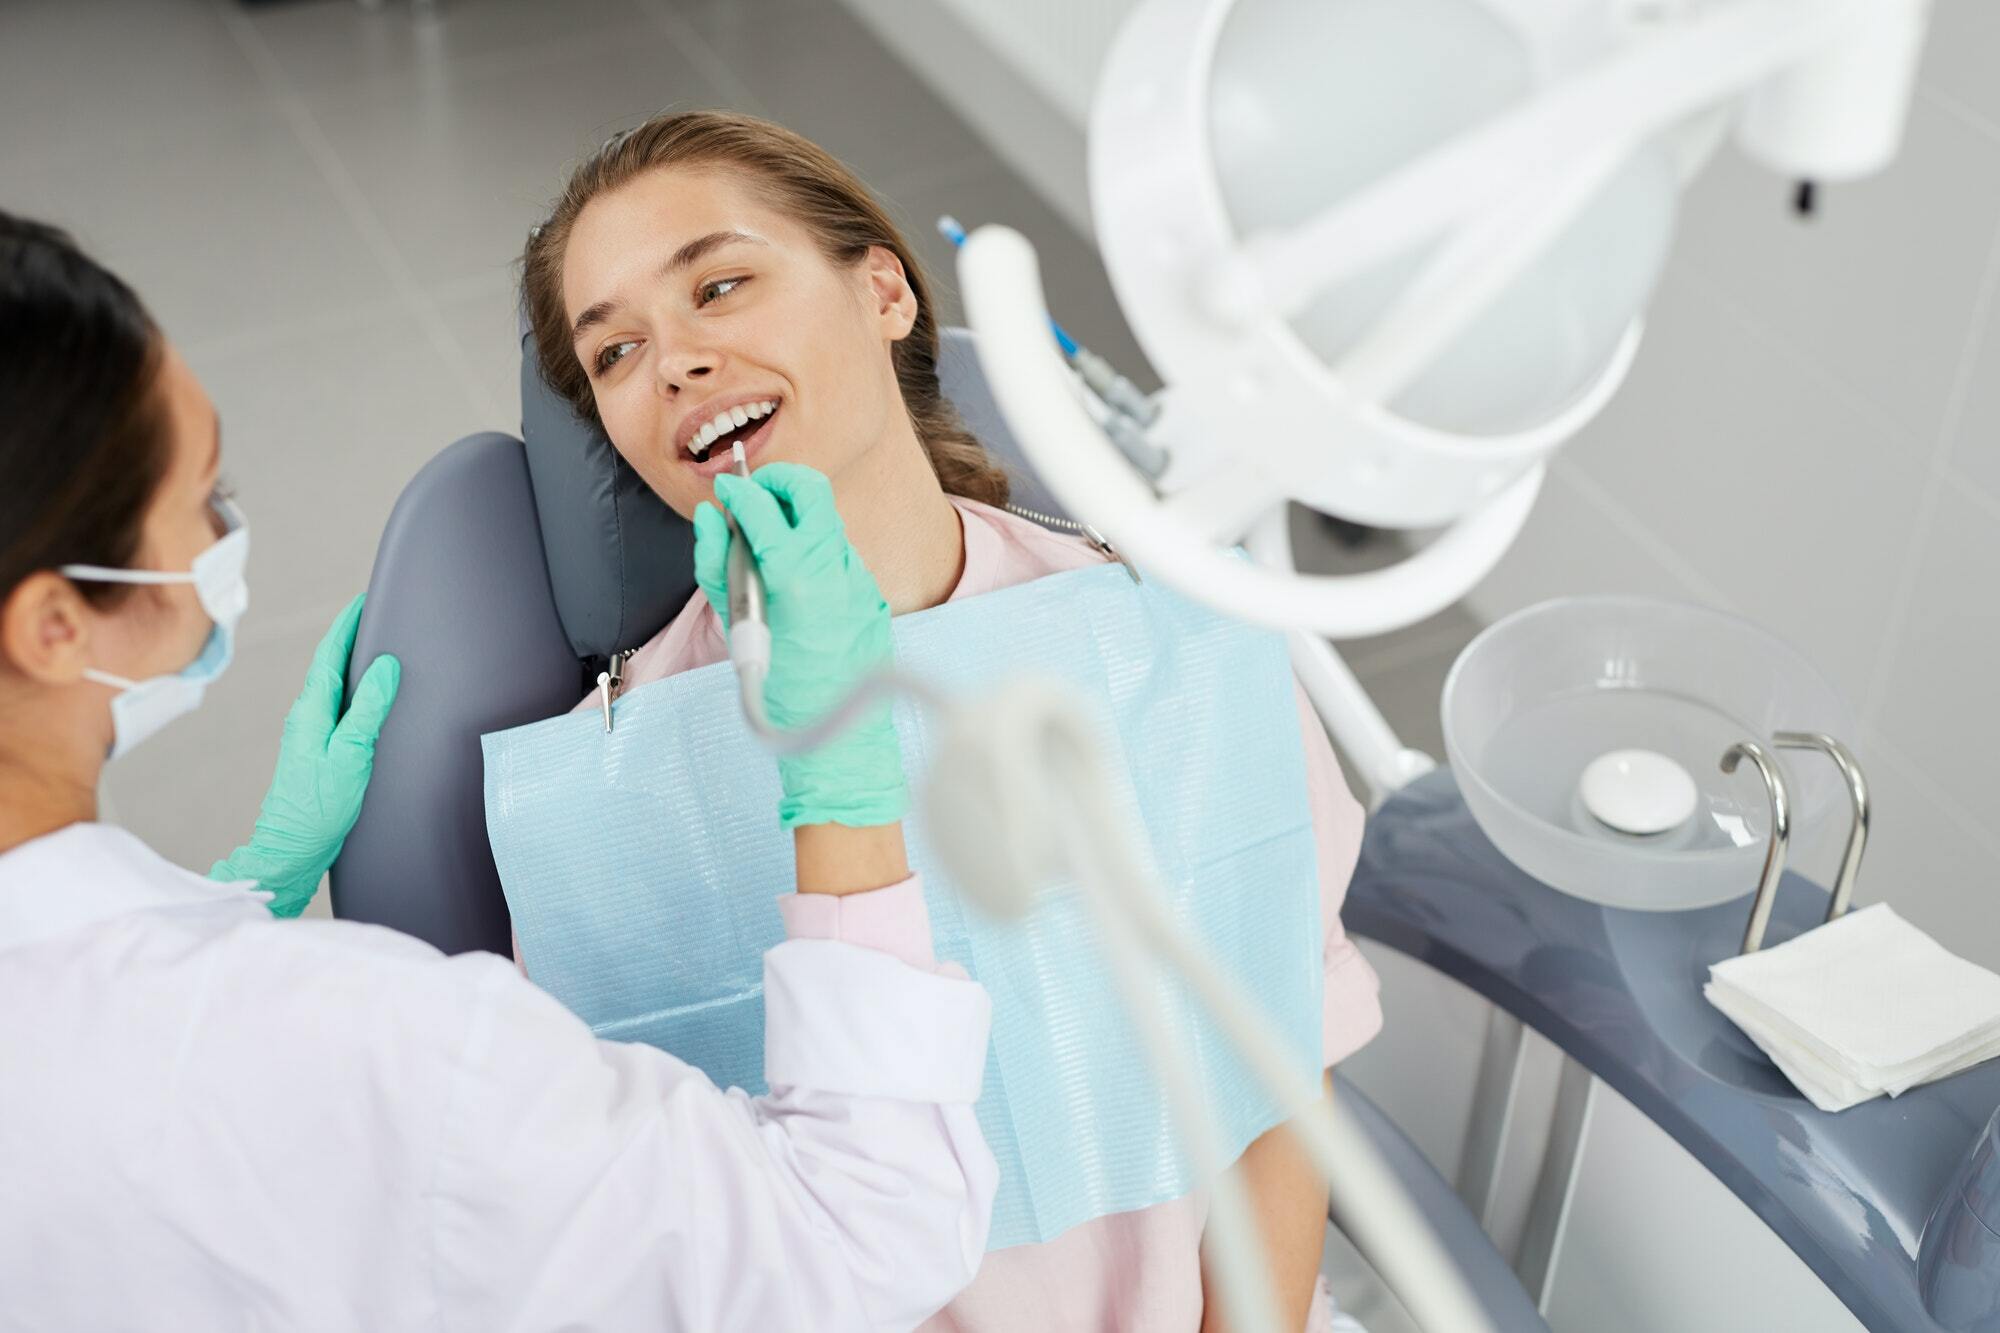 Dental Clinic Oral Health Dental Clinics Dental Treatment Best Dental Clinic Dental Care Teeth Whitening Best Dentist